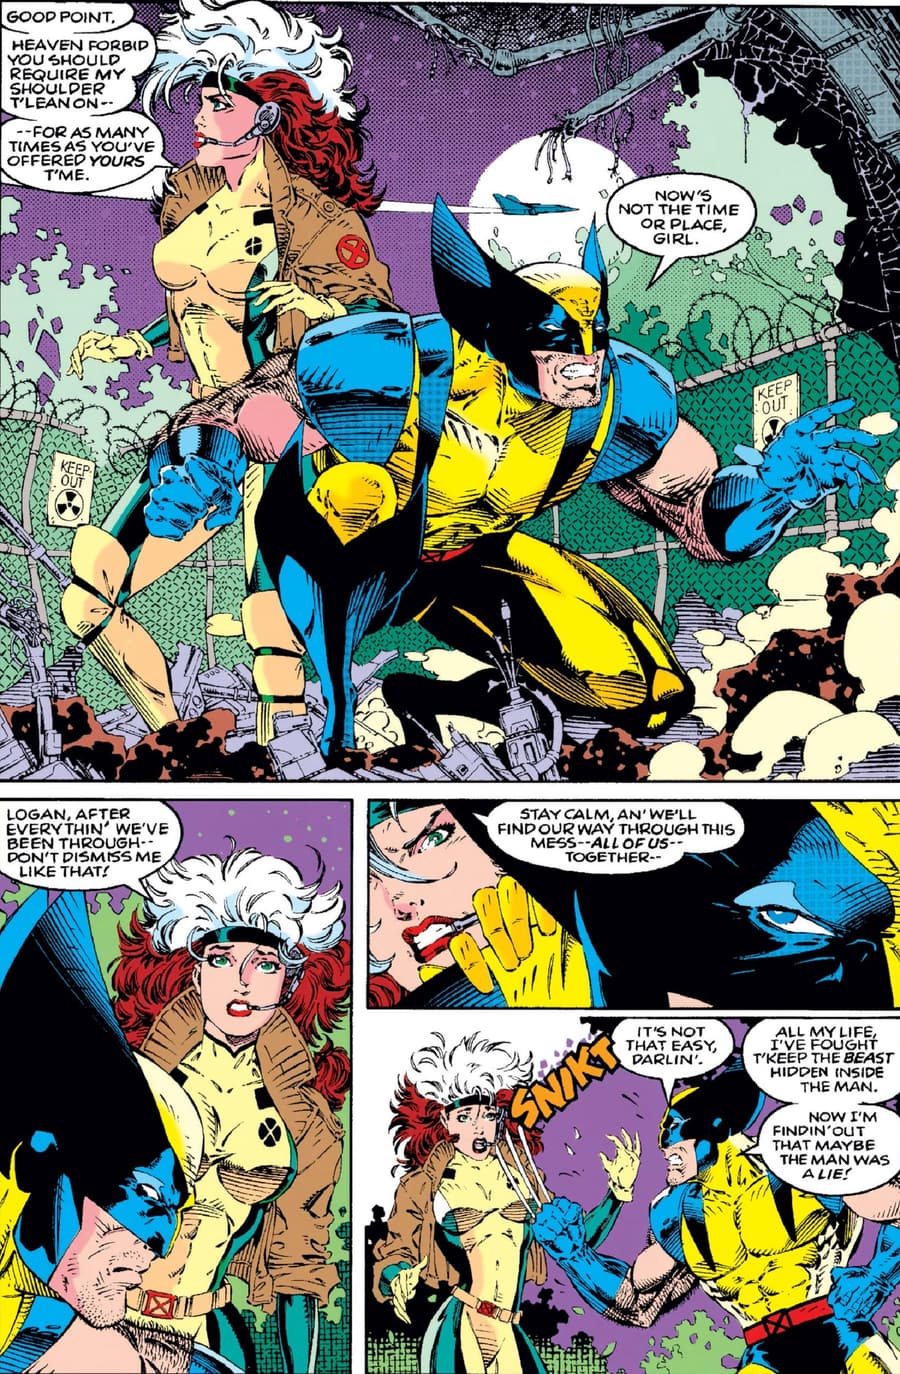 X-MEN (1991) #13. Script by Nicieza with art by Art Thibert, Joe Rosas, and Marie Javins.